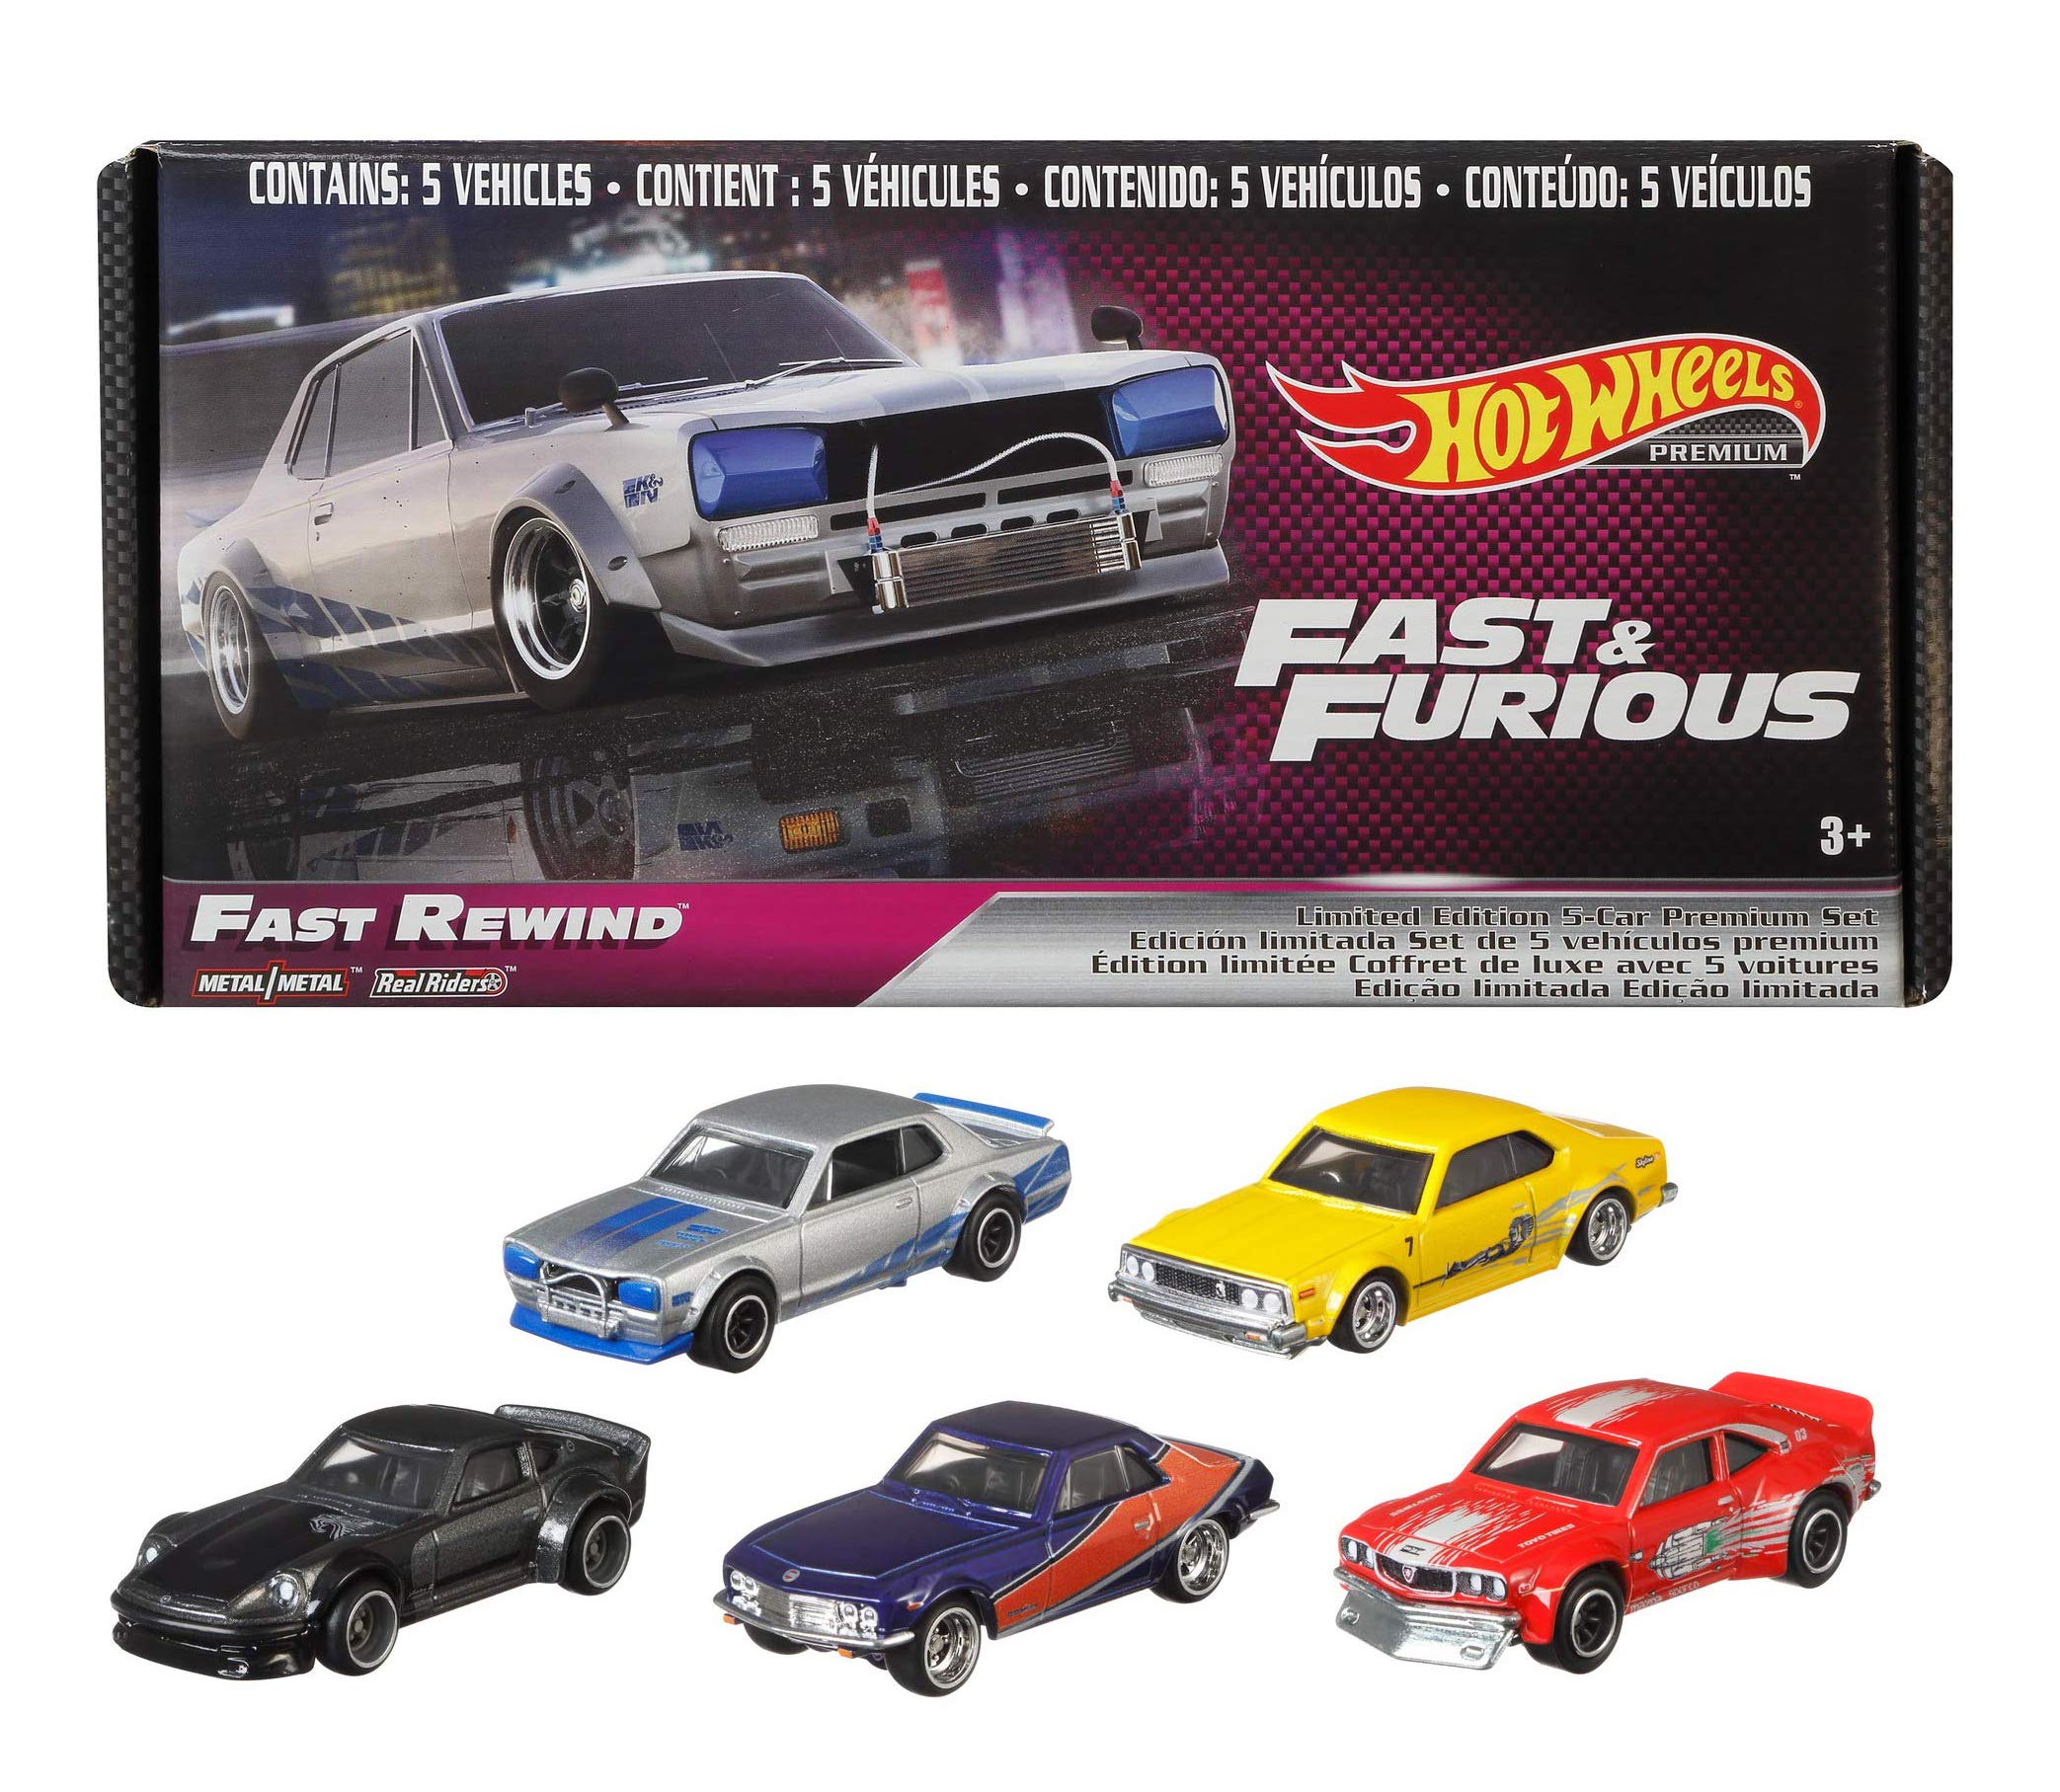 Mua Hot Wheels Fast & Furious Bundle, 5 Premium Vehicles from Fast & Furious Movie Series, 164